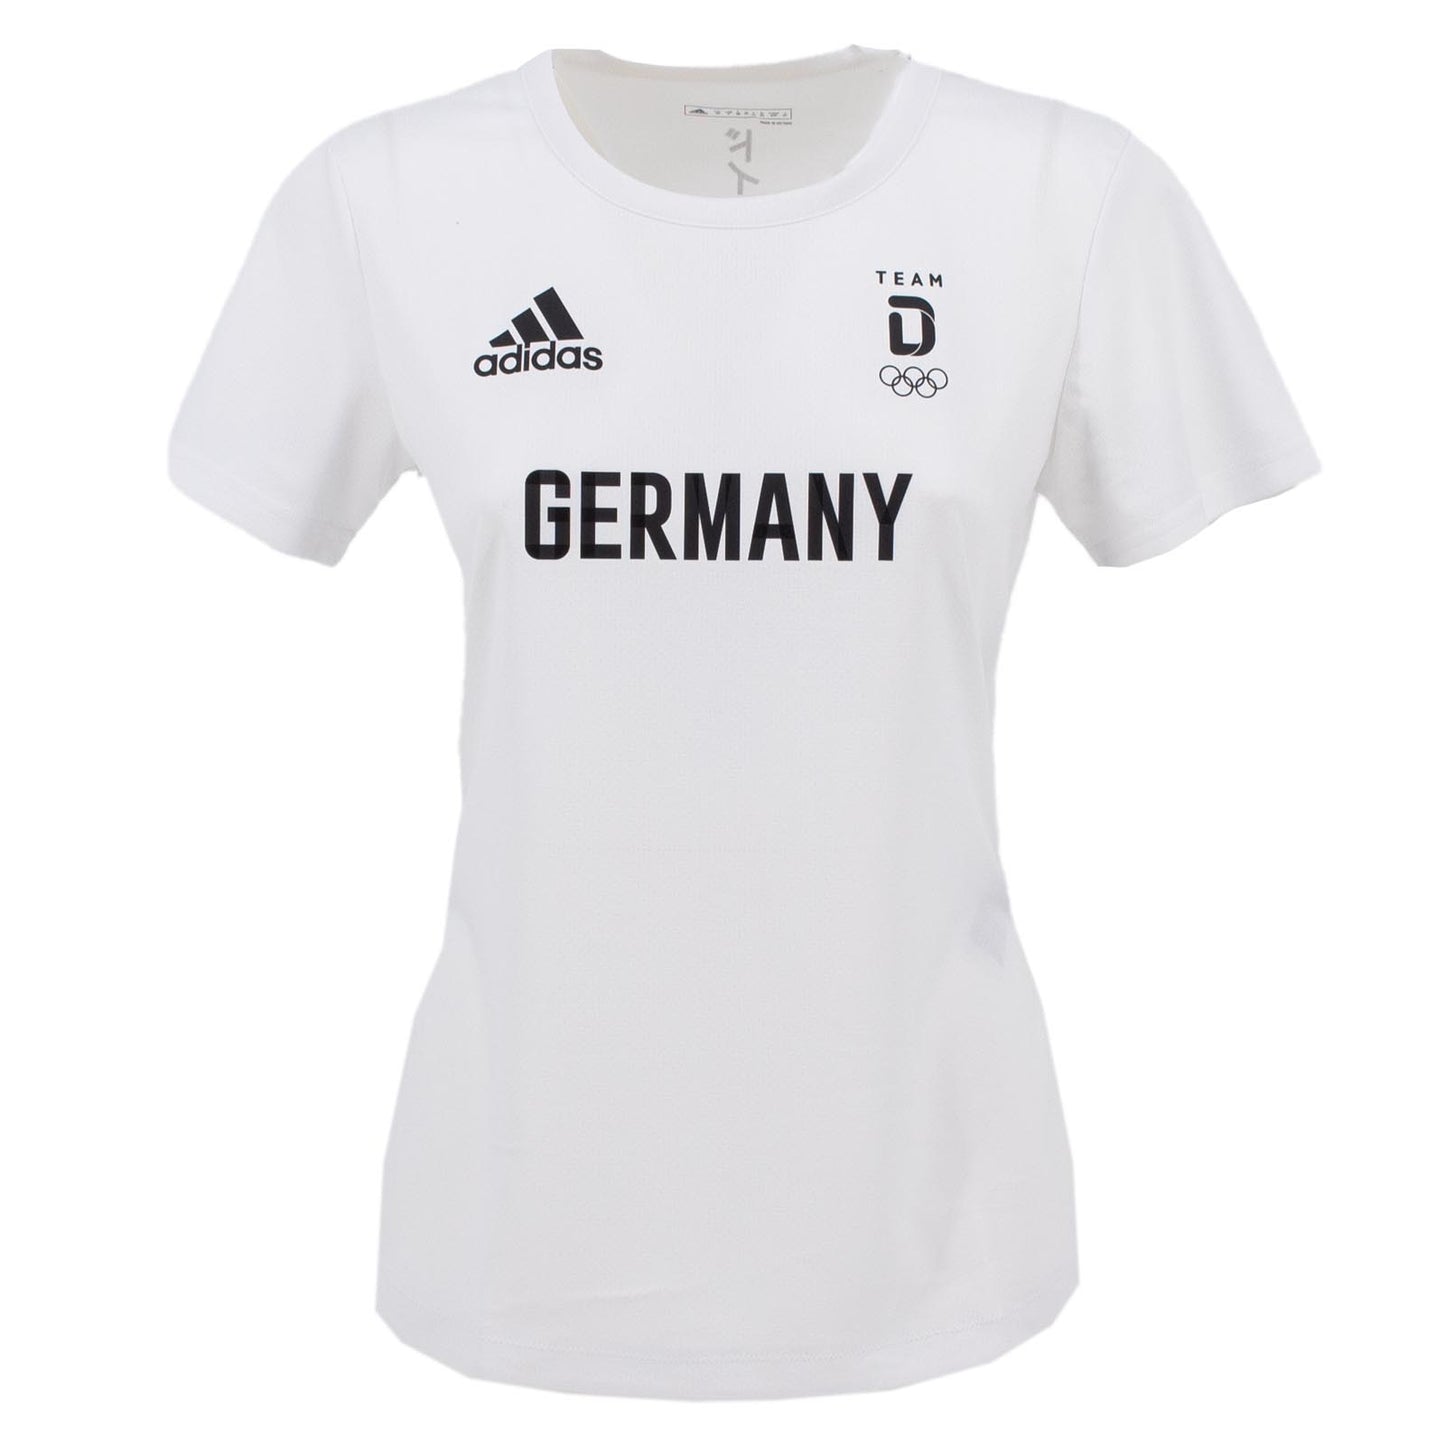 Adidas Olympia Tokyo 2020 GER Team Germany Deutschland W T-Shirt Damen FS0078 40 / M